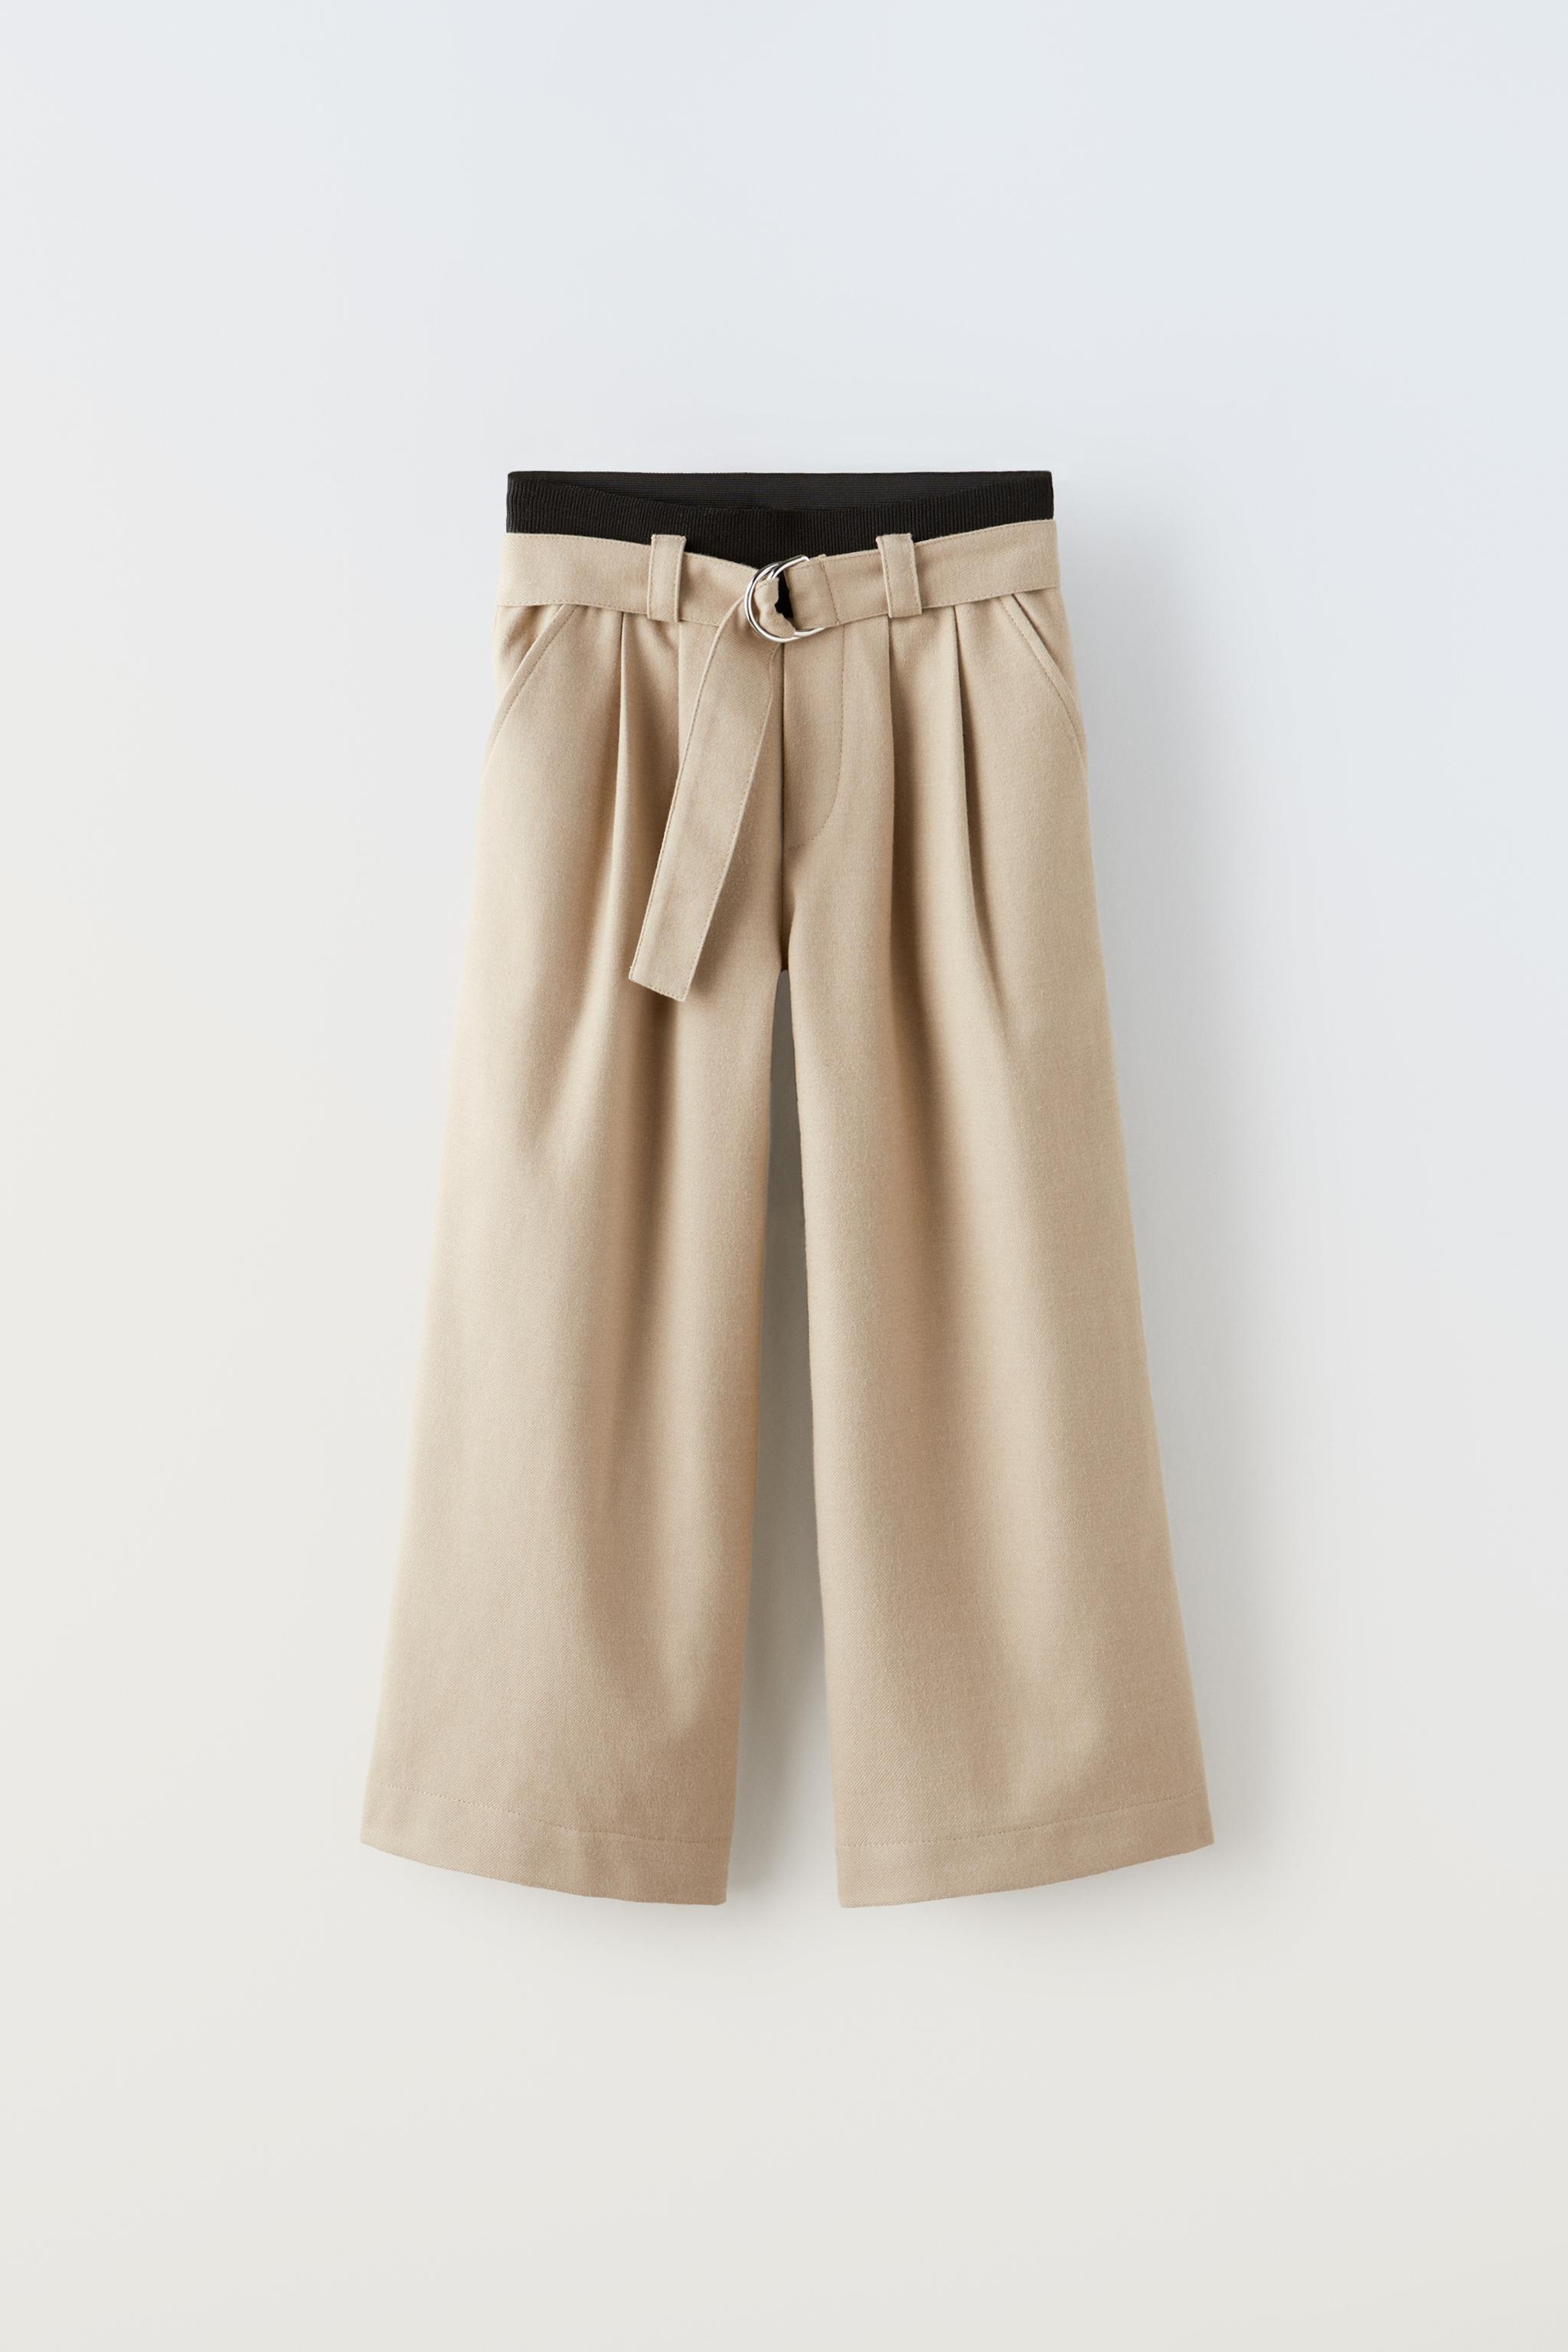 High-waisted ecru linen pants with darts